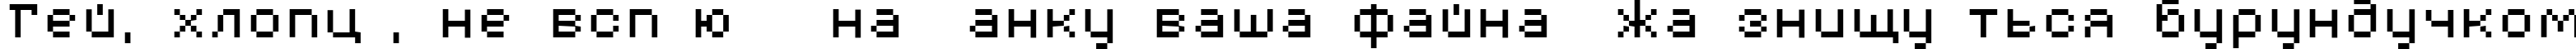 Пример написания шрифтом AuX DotBitC Xtra текста на украинском